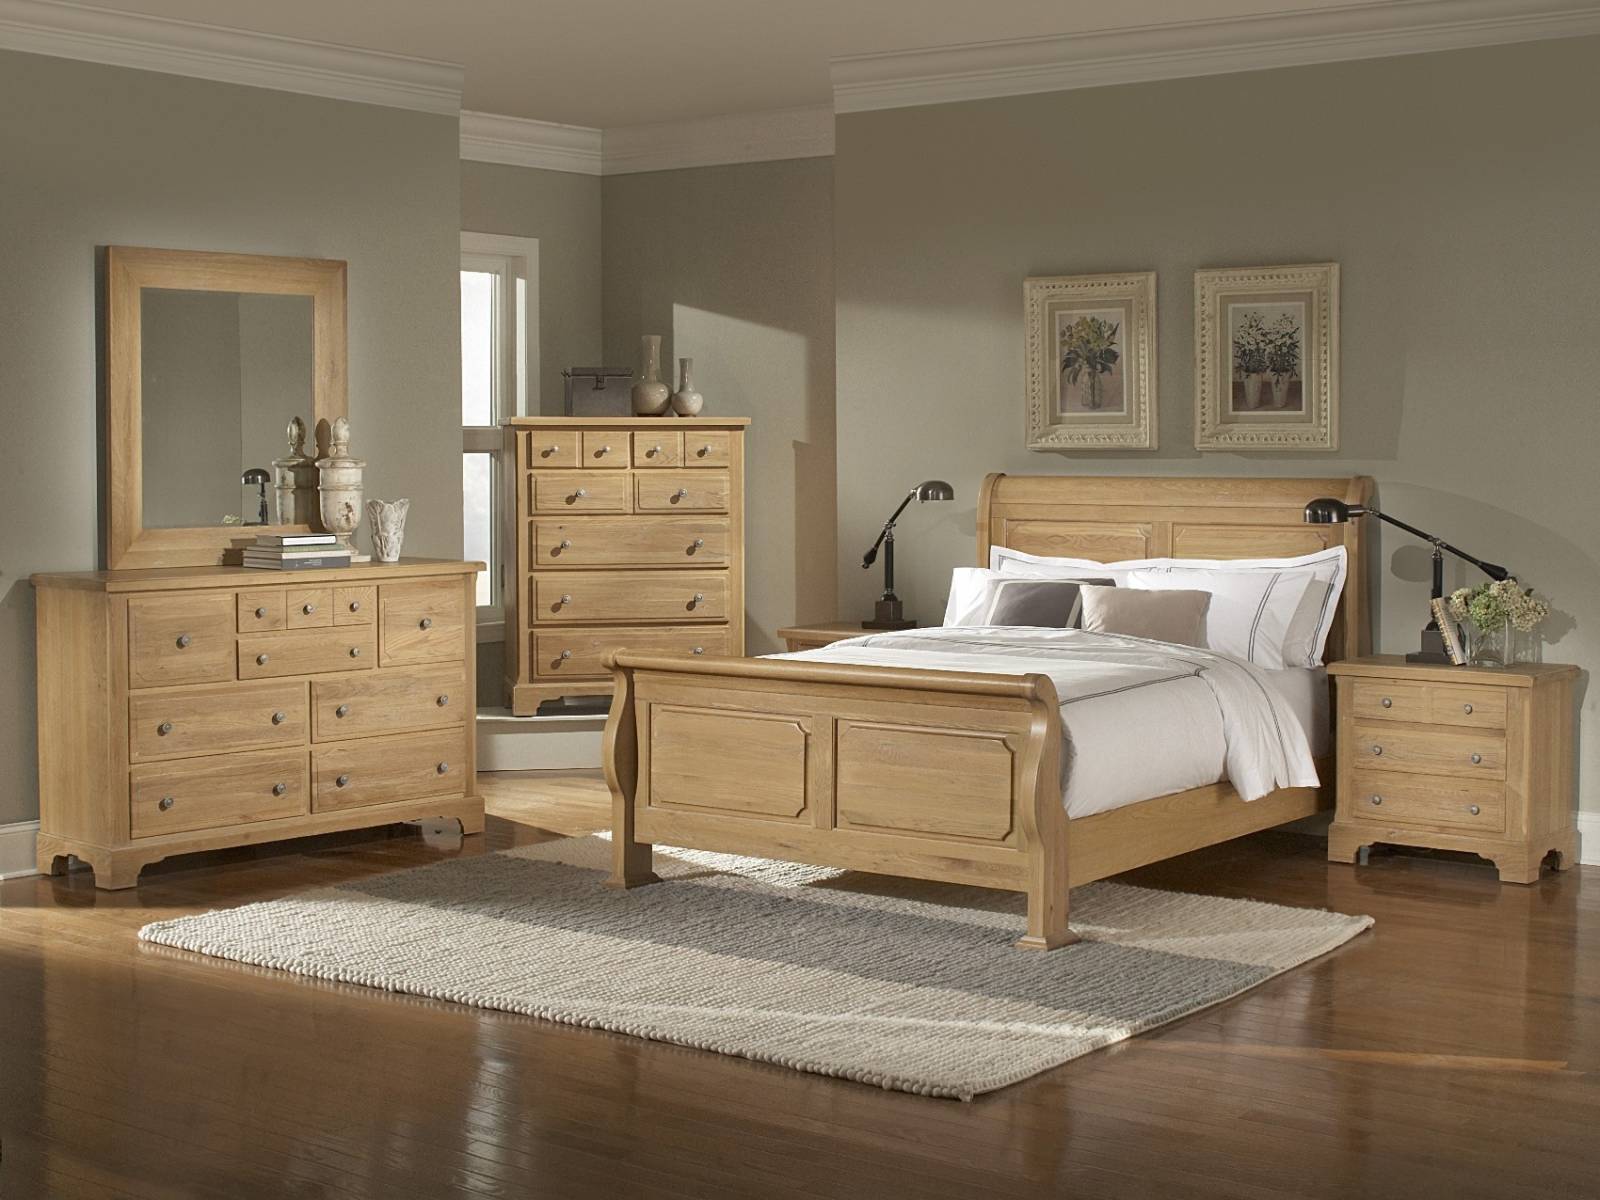 Bedroom ideas with light wood furniture